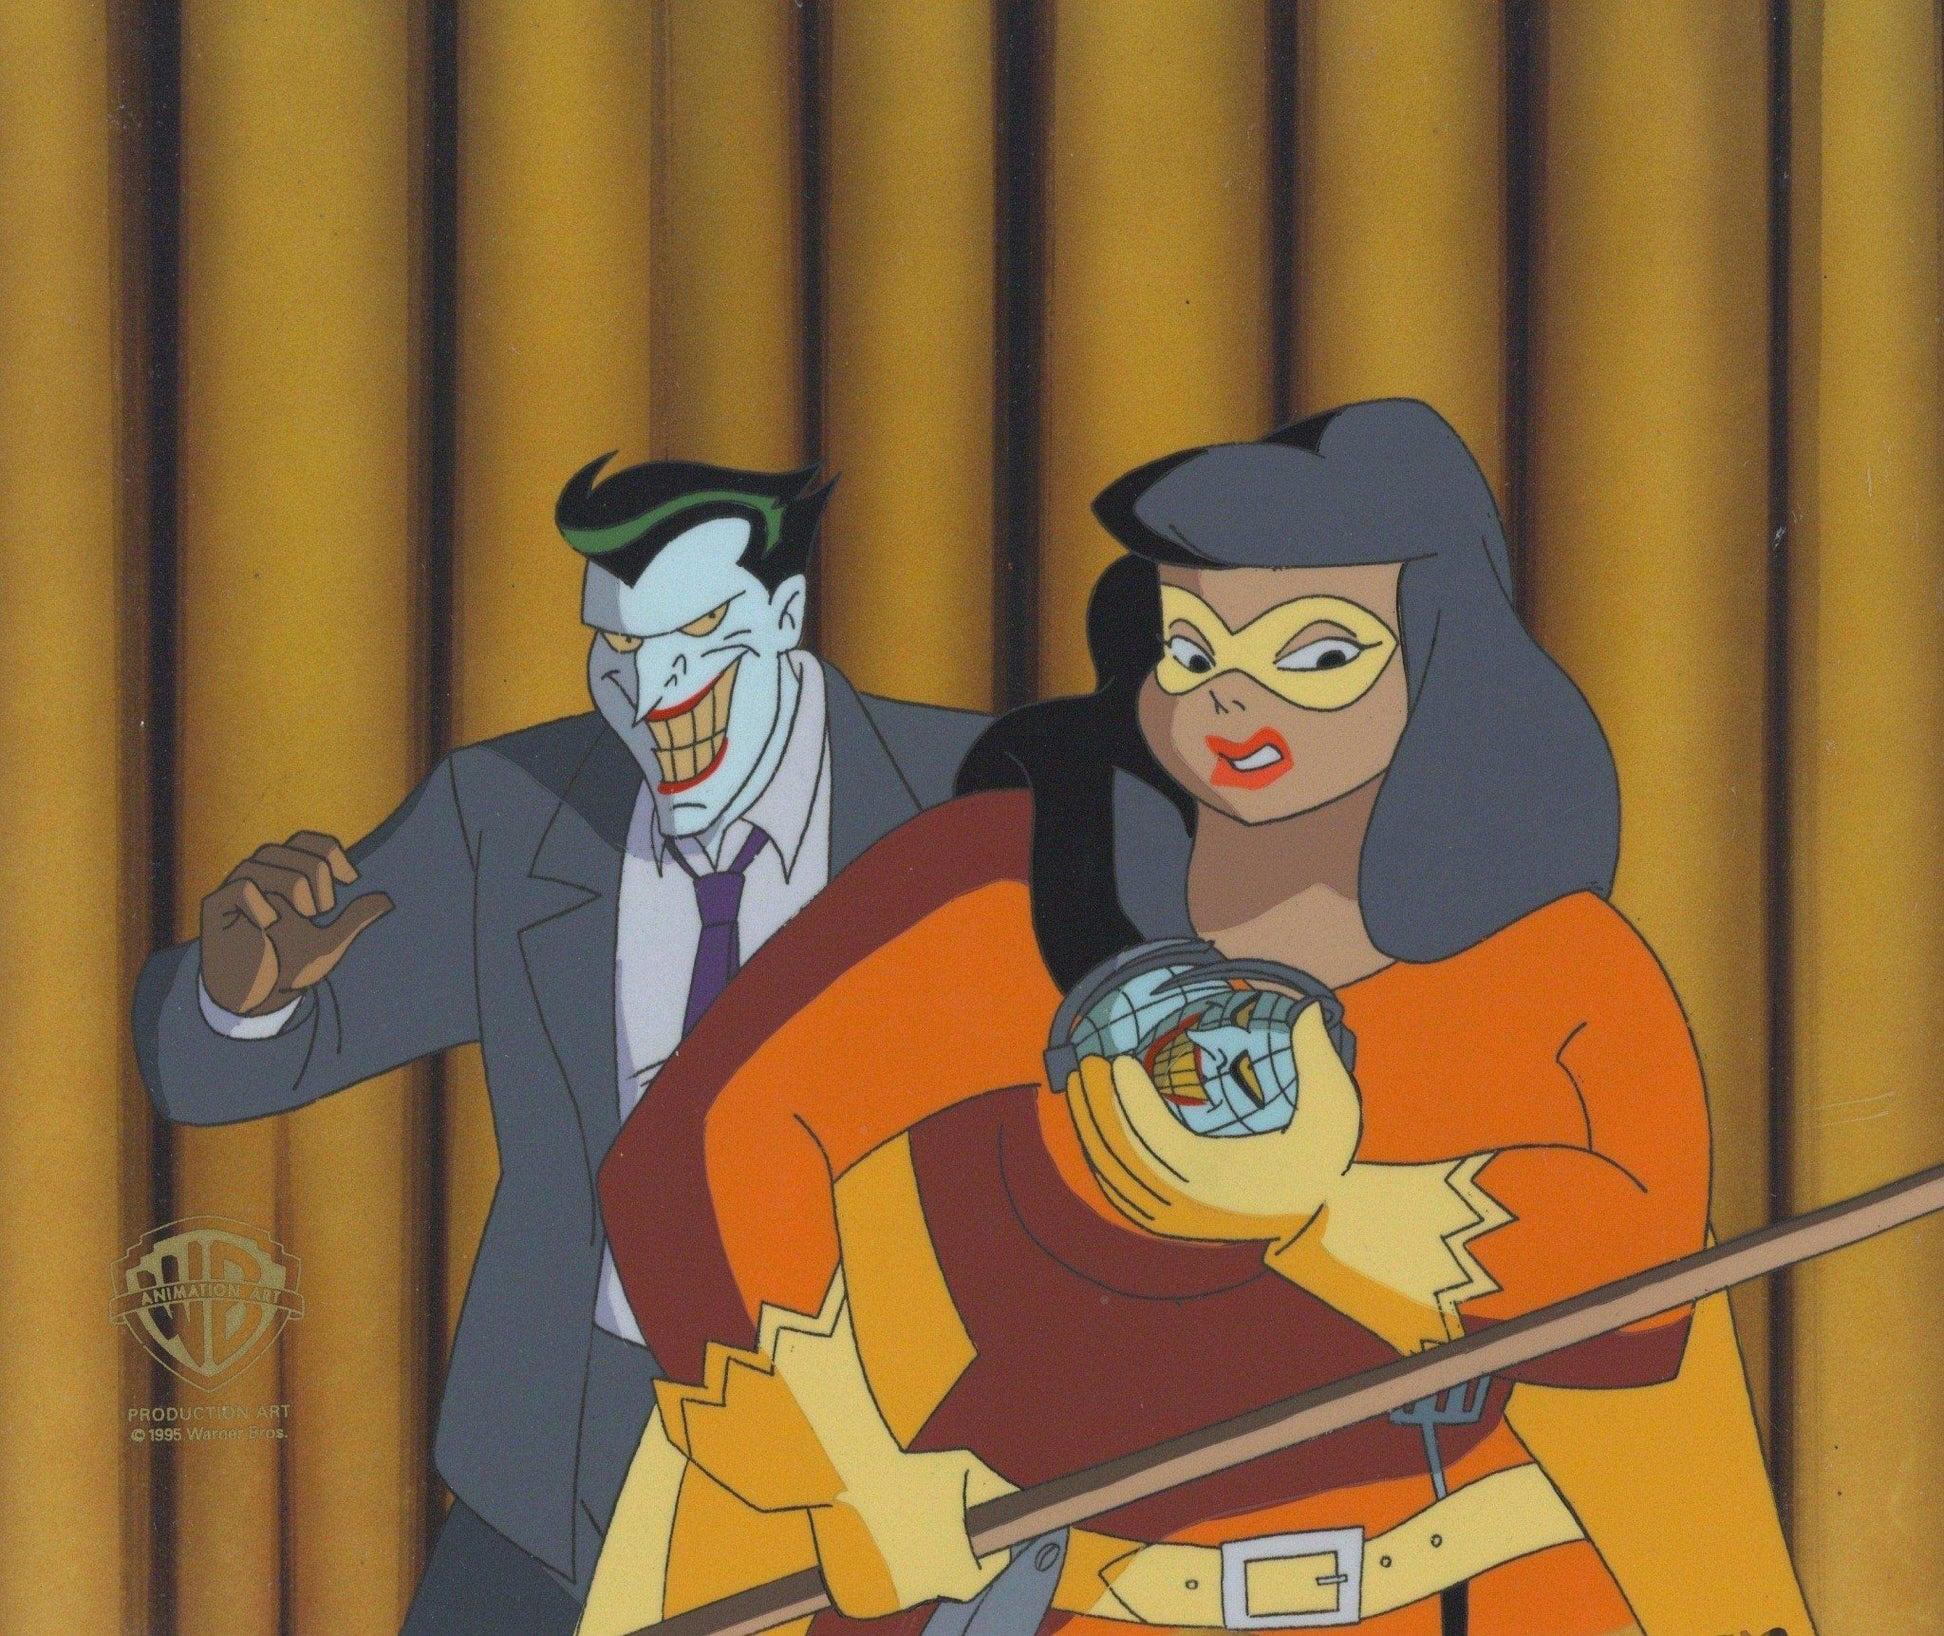 Batman The Animated Series Original Production Cel: Joker and Rolling Pin - Art by DC Comics Studio Artists